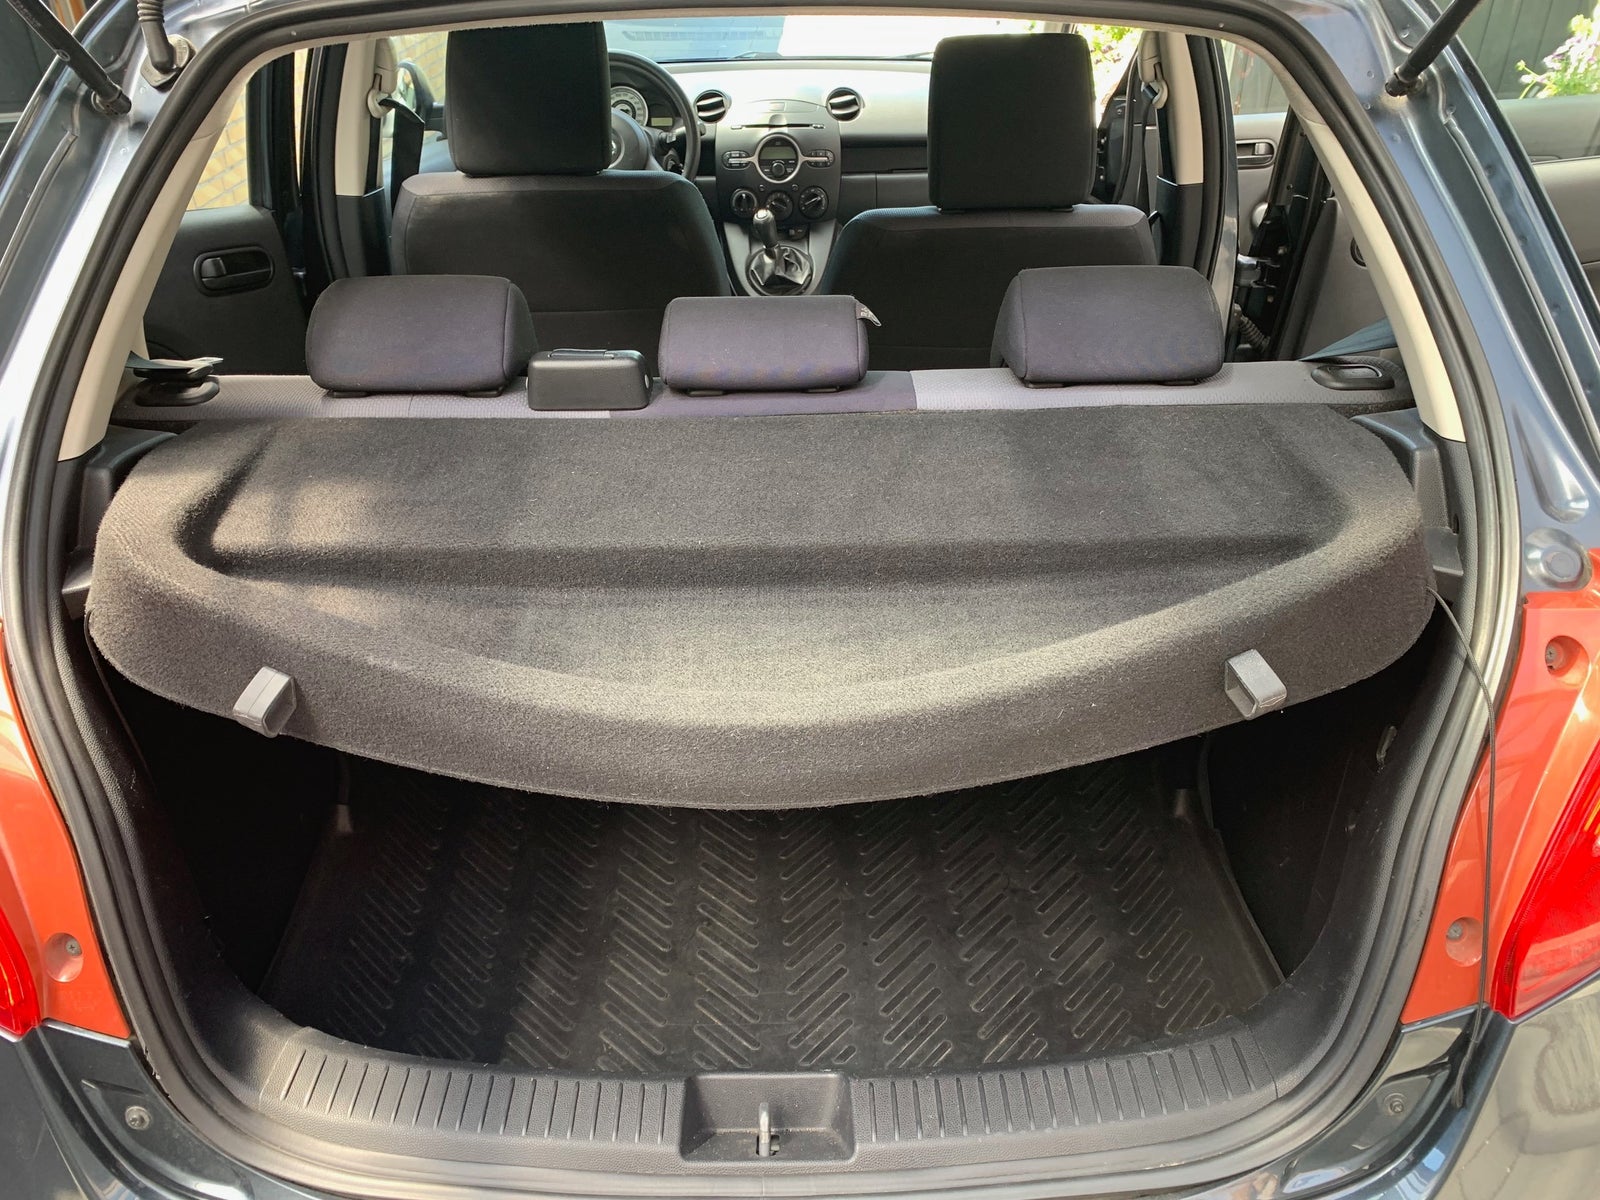 Mazda 2 1,3 Benzin modelår 2009 km 83000 Blåmetal ABS airbag